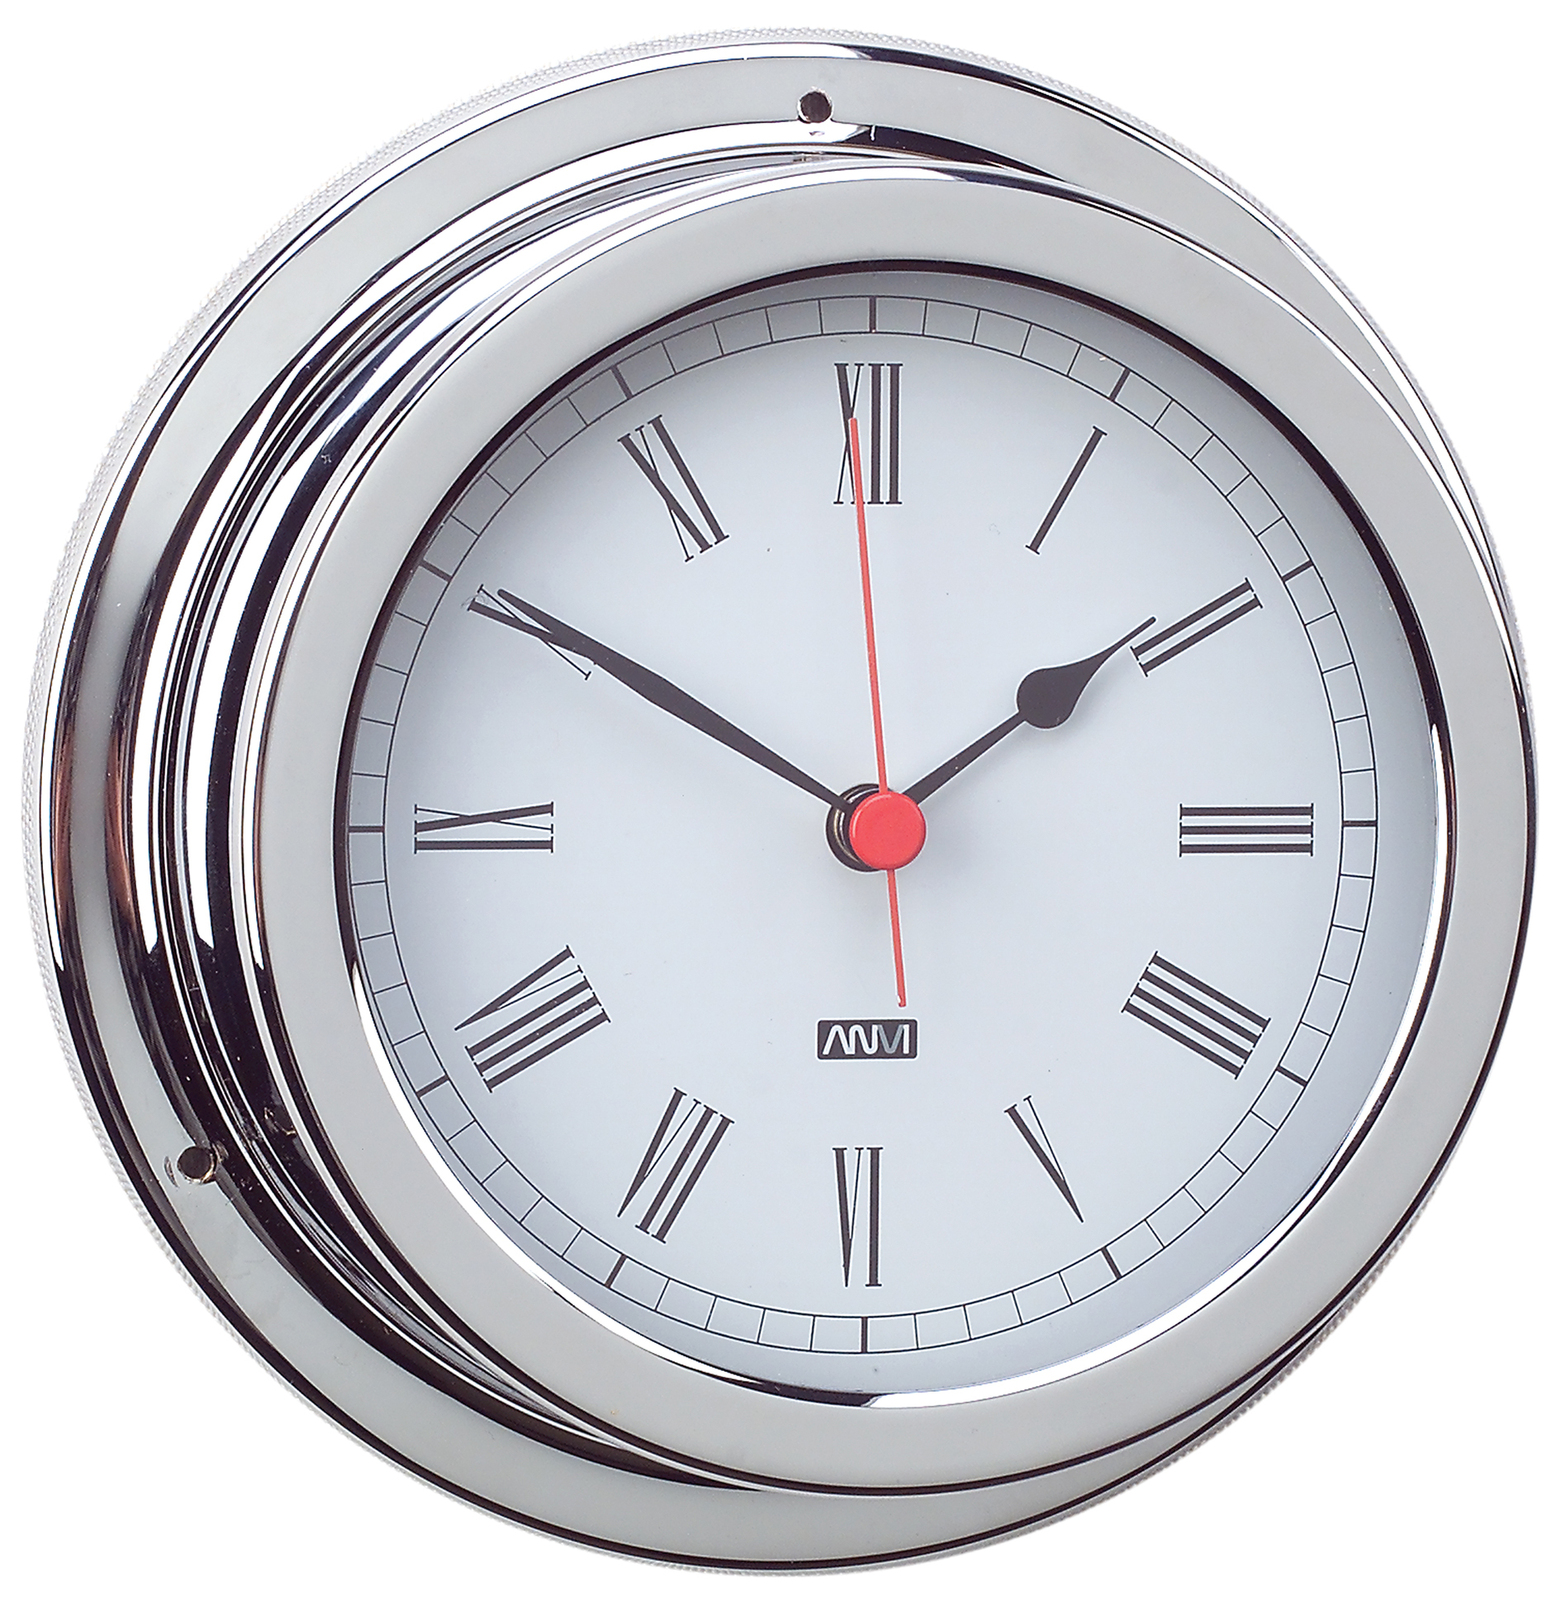 Risingsun Clocks  Gifts  Clock repair service  Bengaluru Karnataka   Zaubee